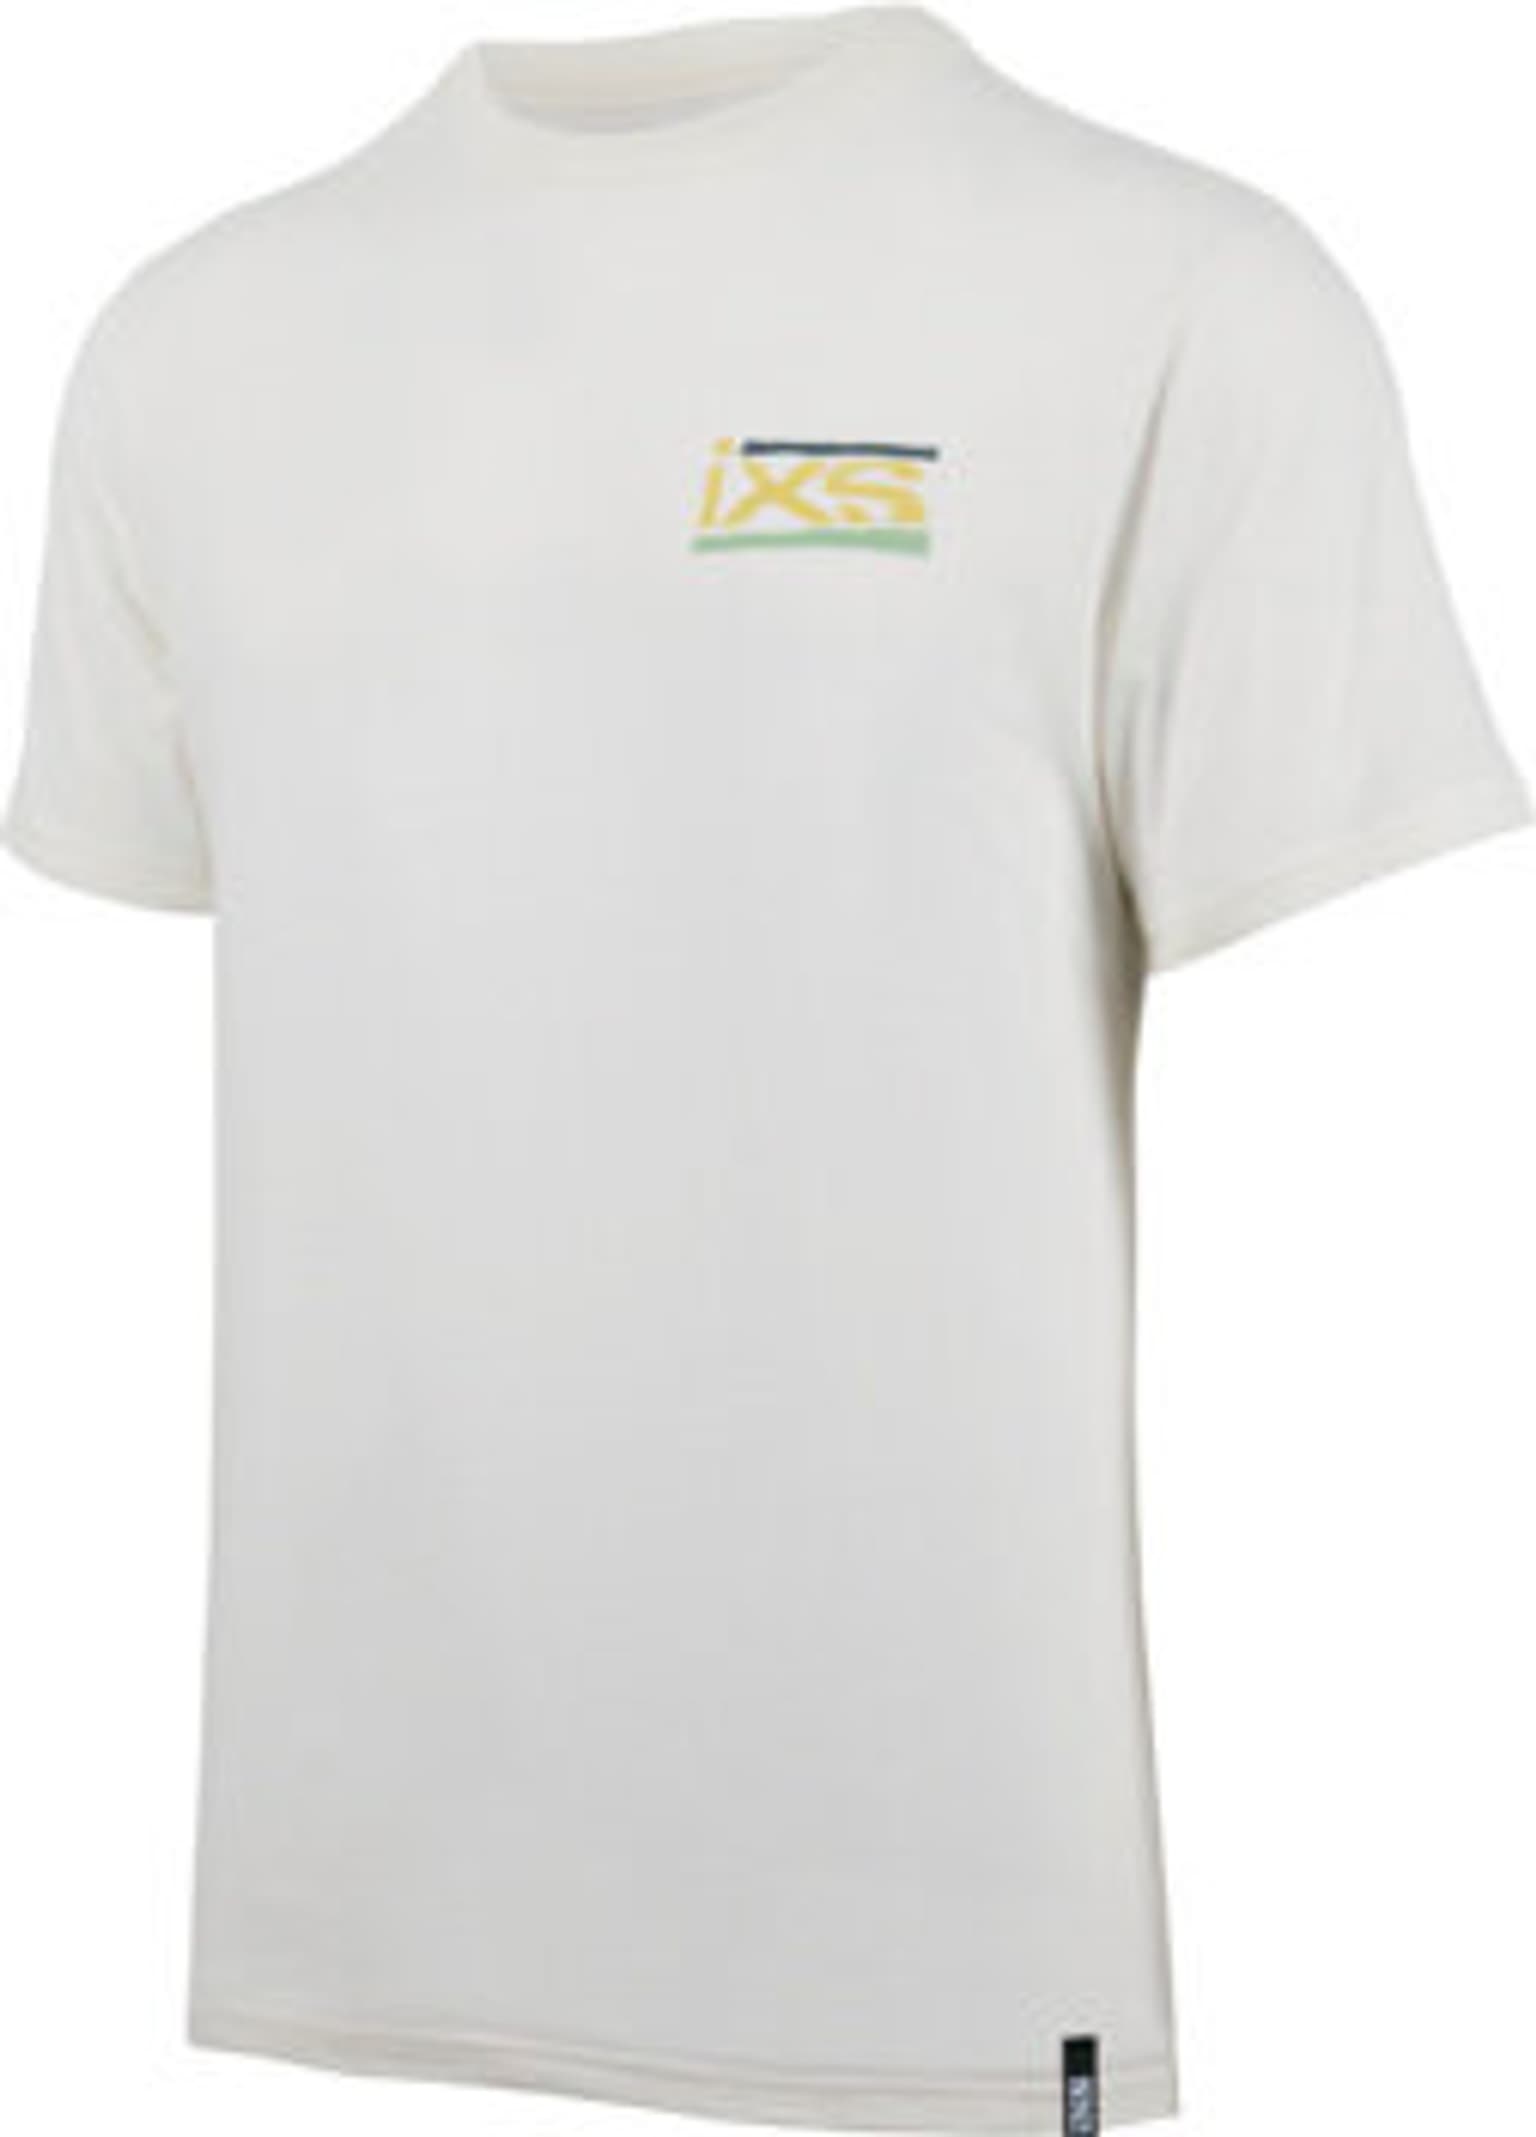 iXS iXS Arch organic tee T-shirt bianco-grezzo 1